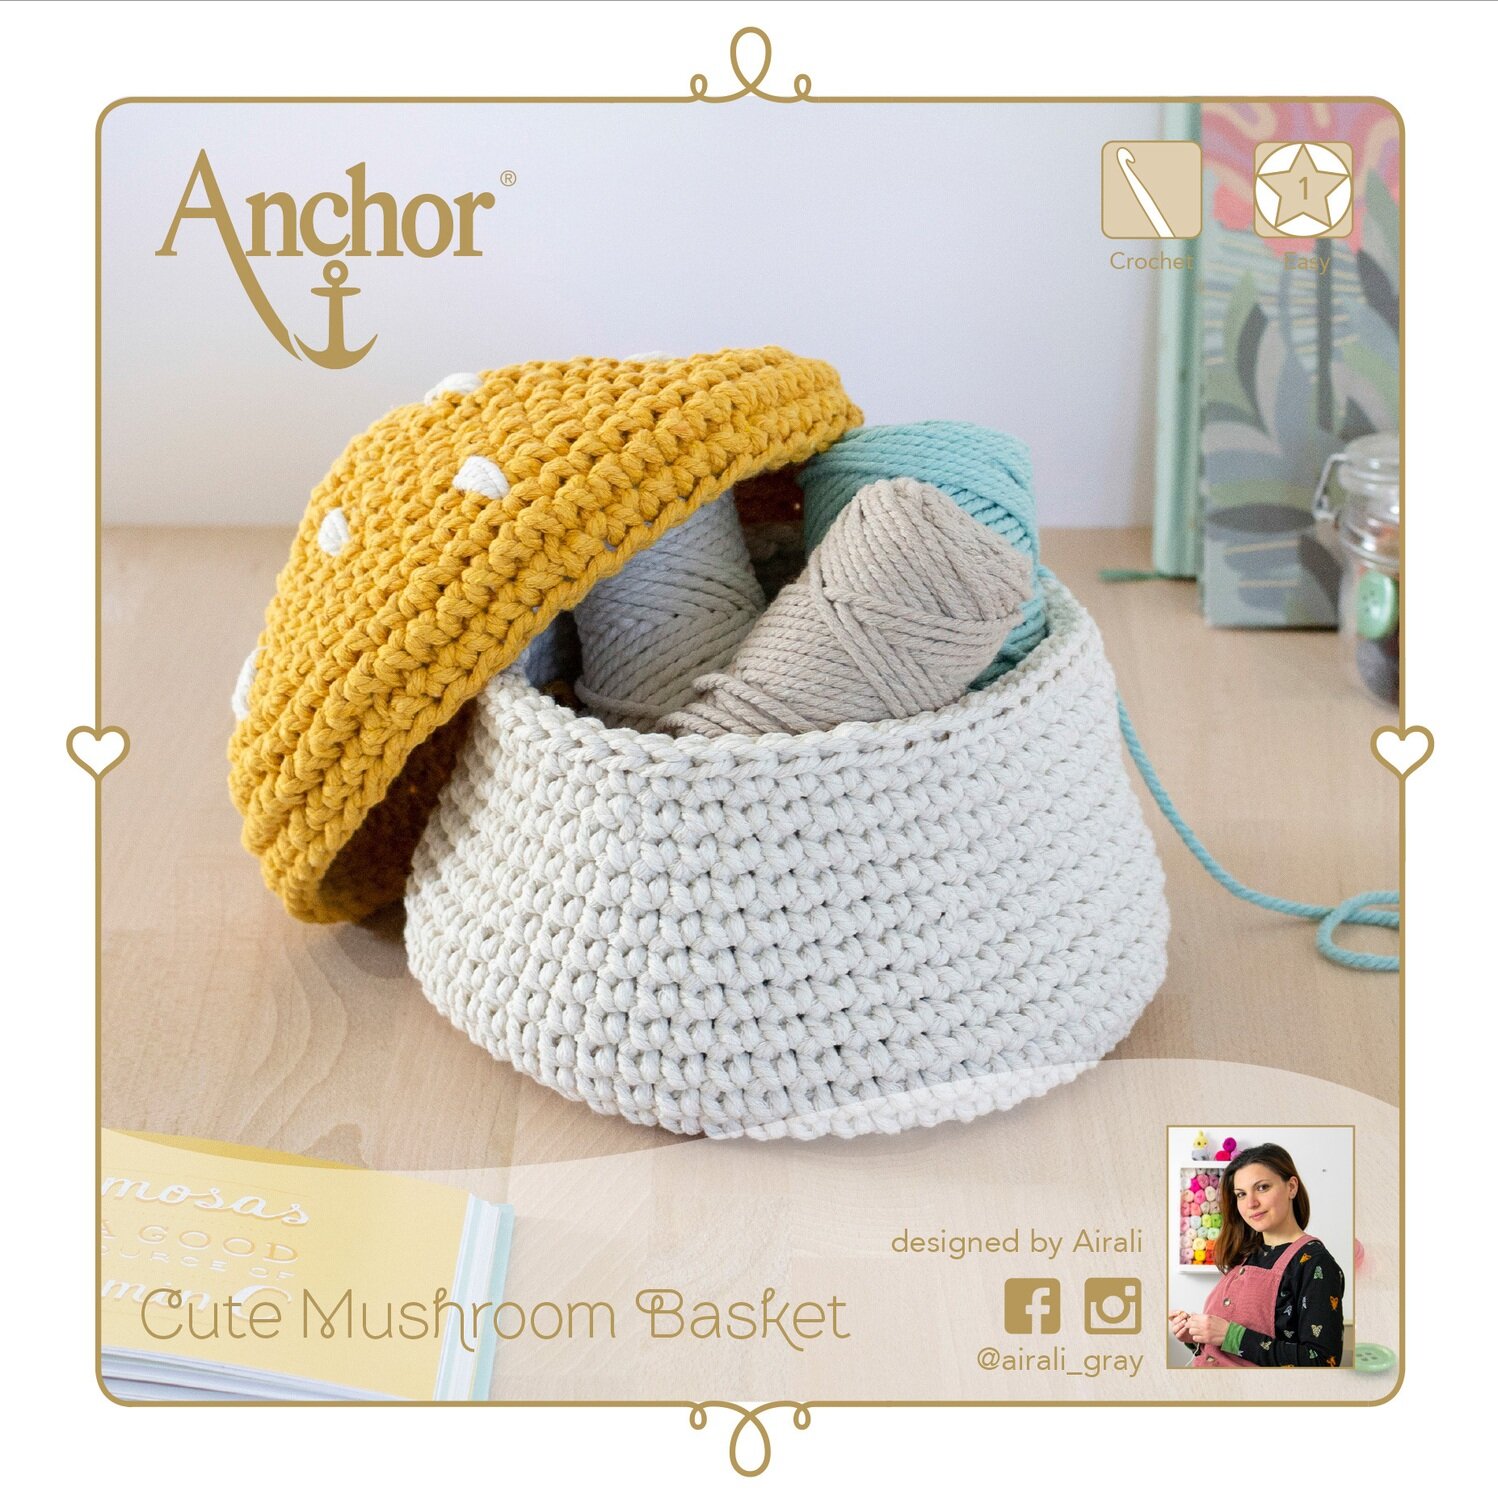 Anchor Crochet kit-Mushroom basket